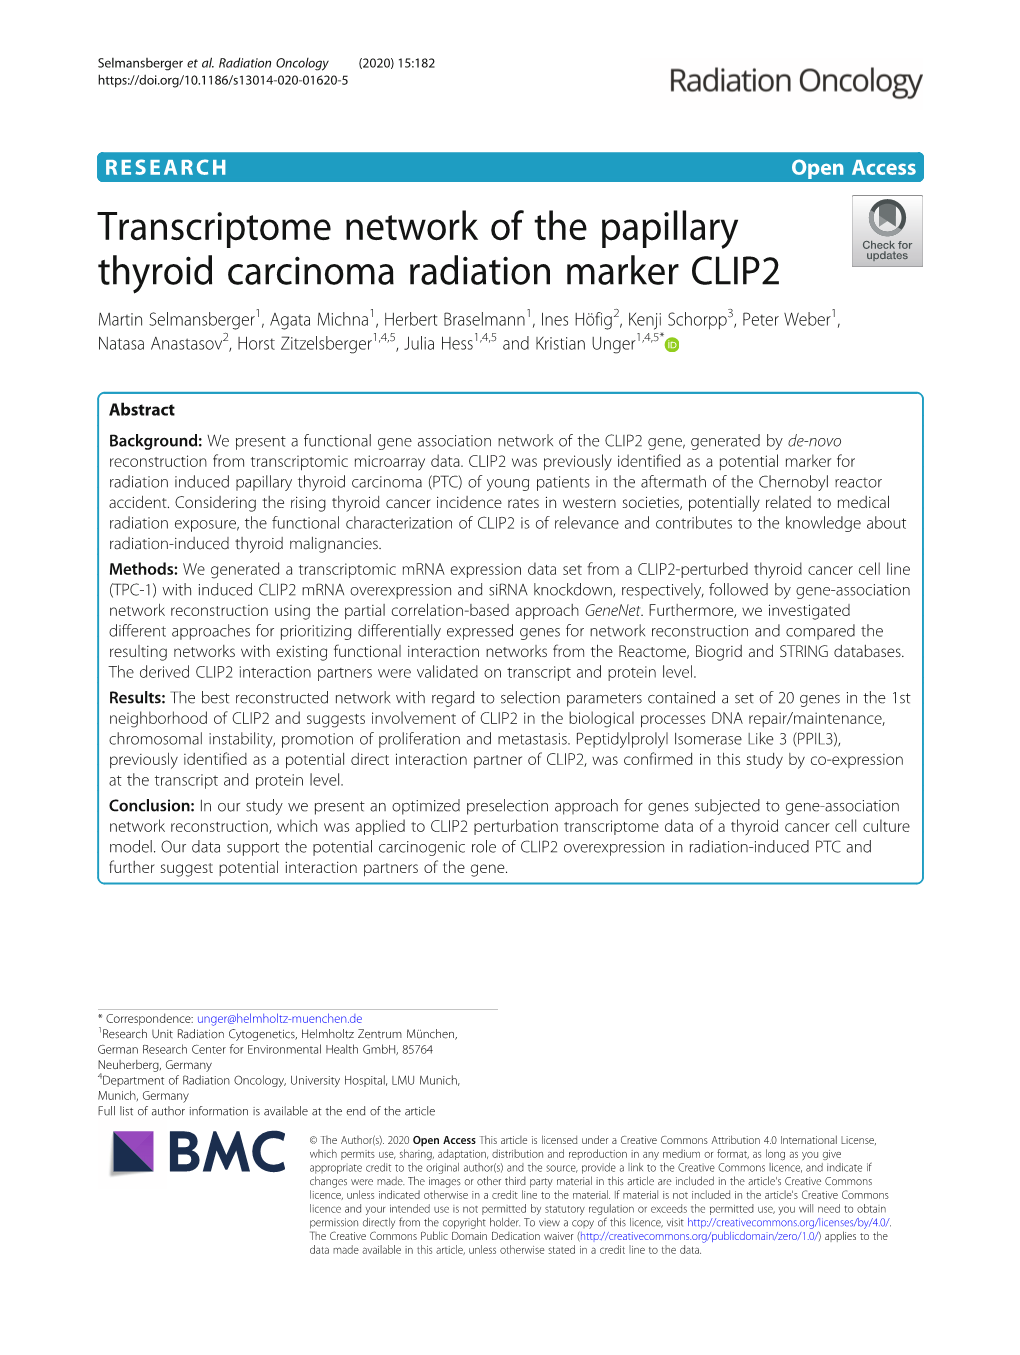 Transcriptome Network of the Papillary Thyroid Carcinoma Radiation Marker